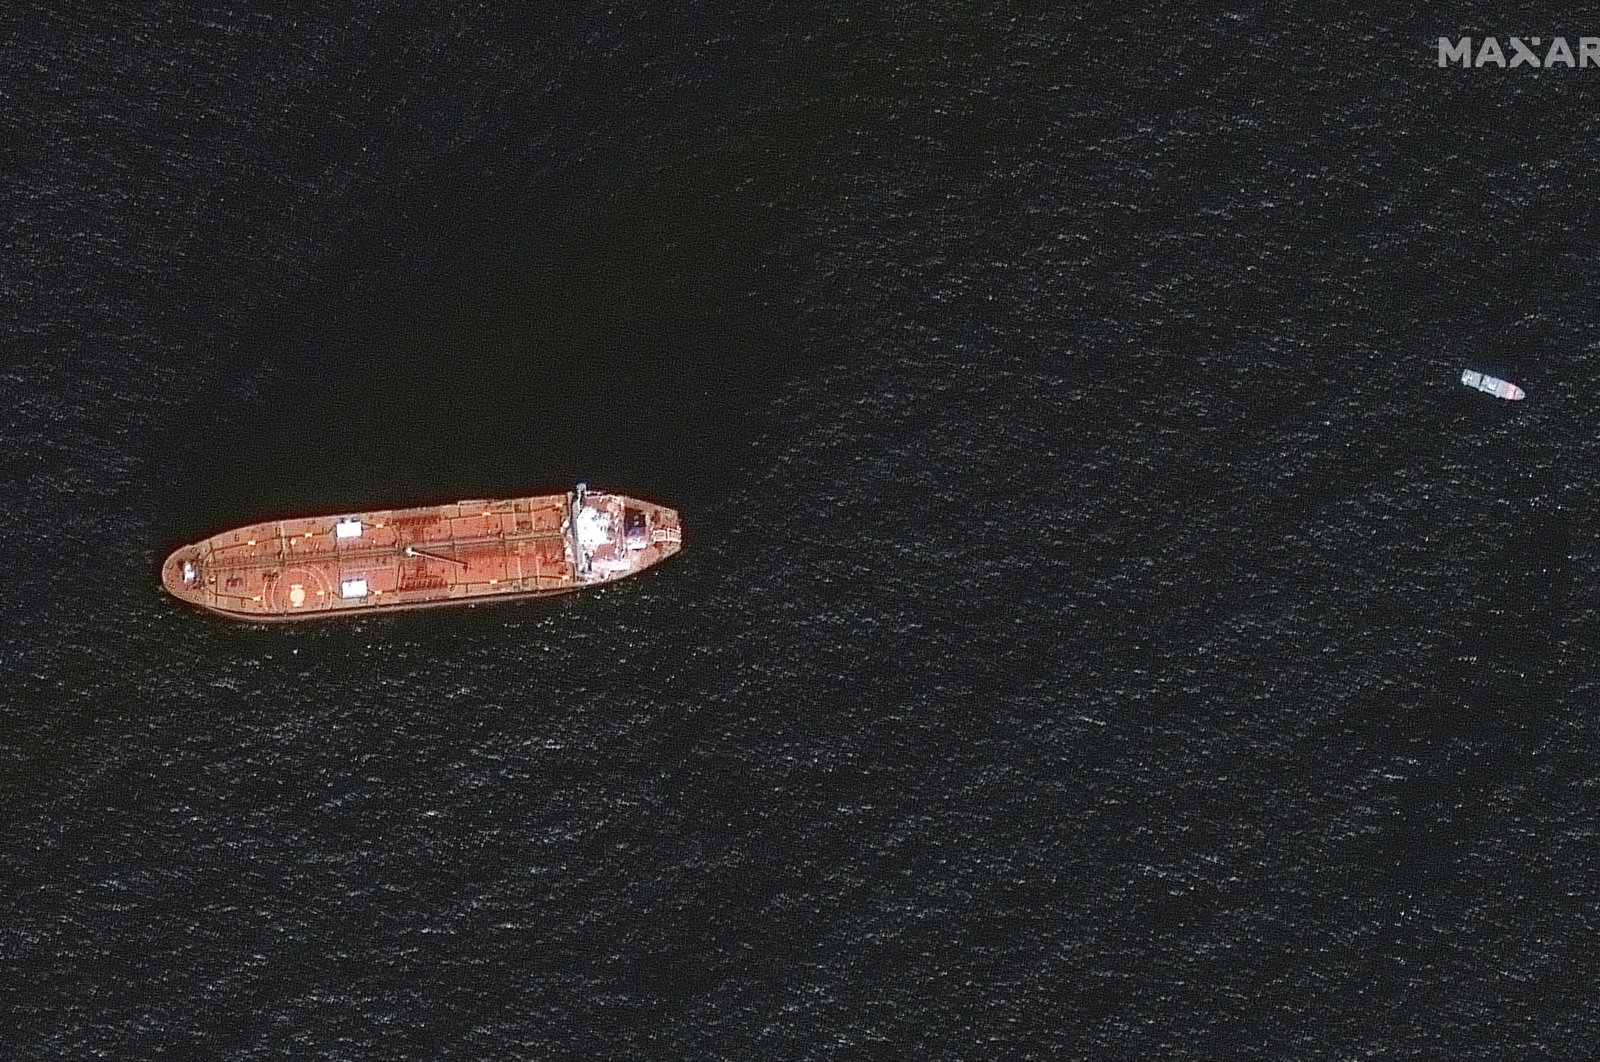 A satellite image shows the damaged Mercer Street Tanker moored off the coast of Fujairah, United Arab Emirates, Aug. 4, 2021. (Maxar Technologies via Reuters)